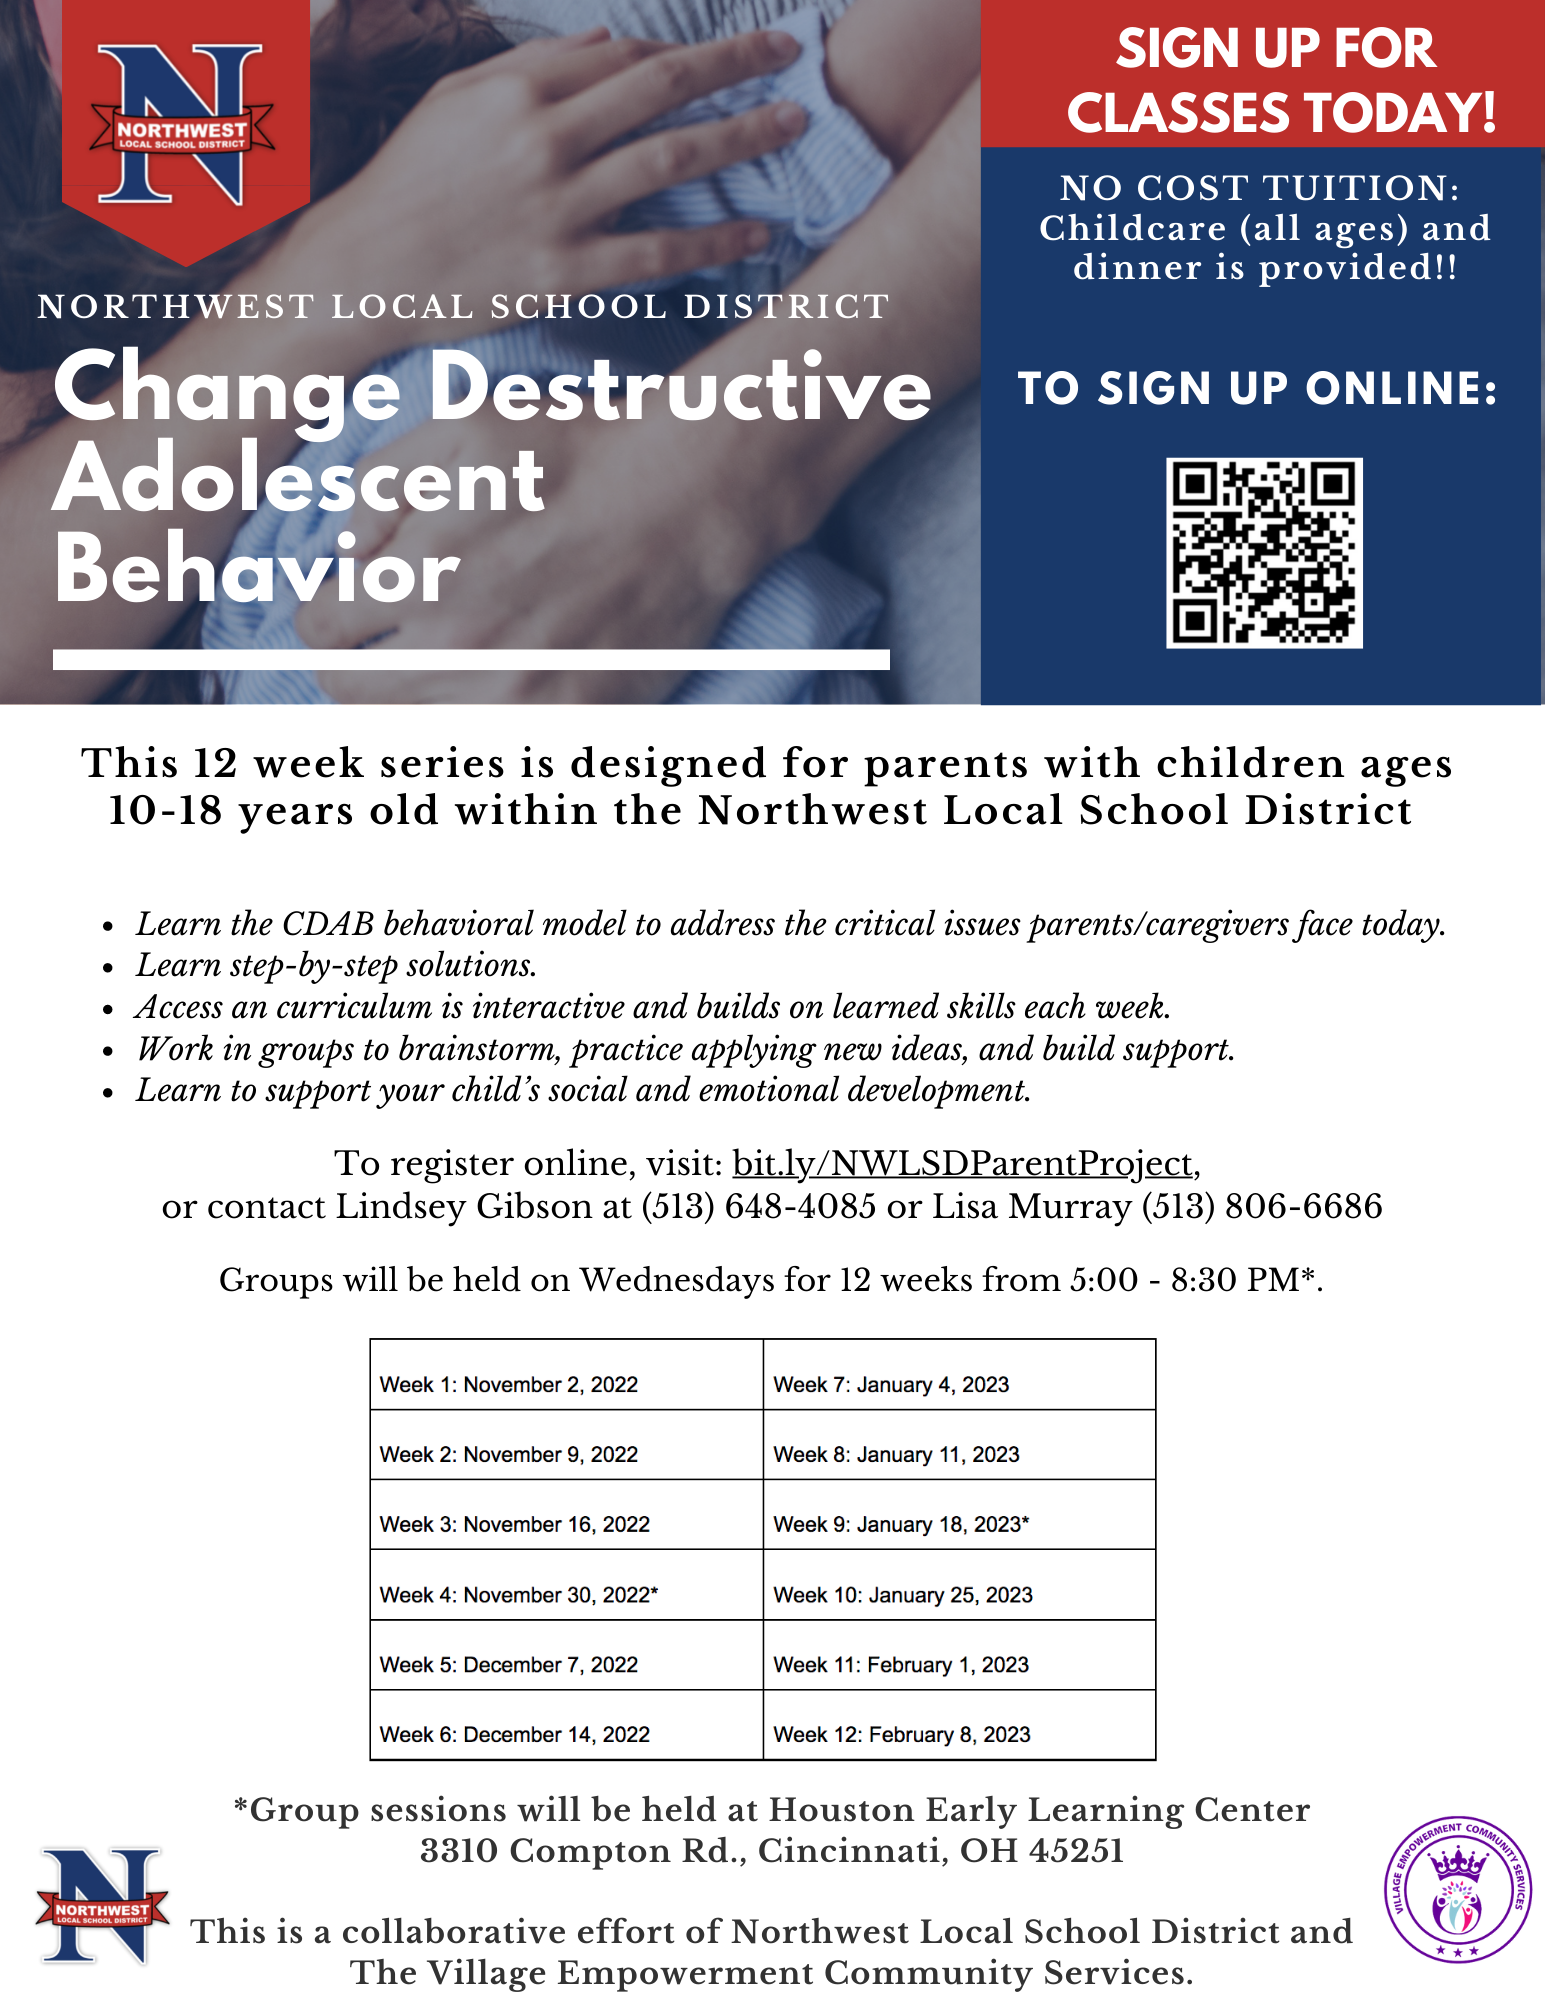 Change Destructive Adolescent Behavior 